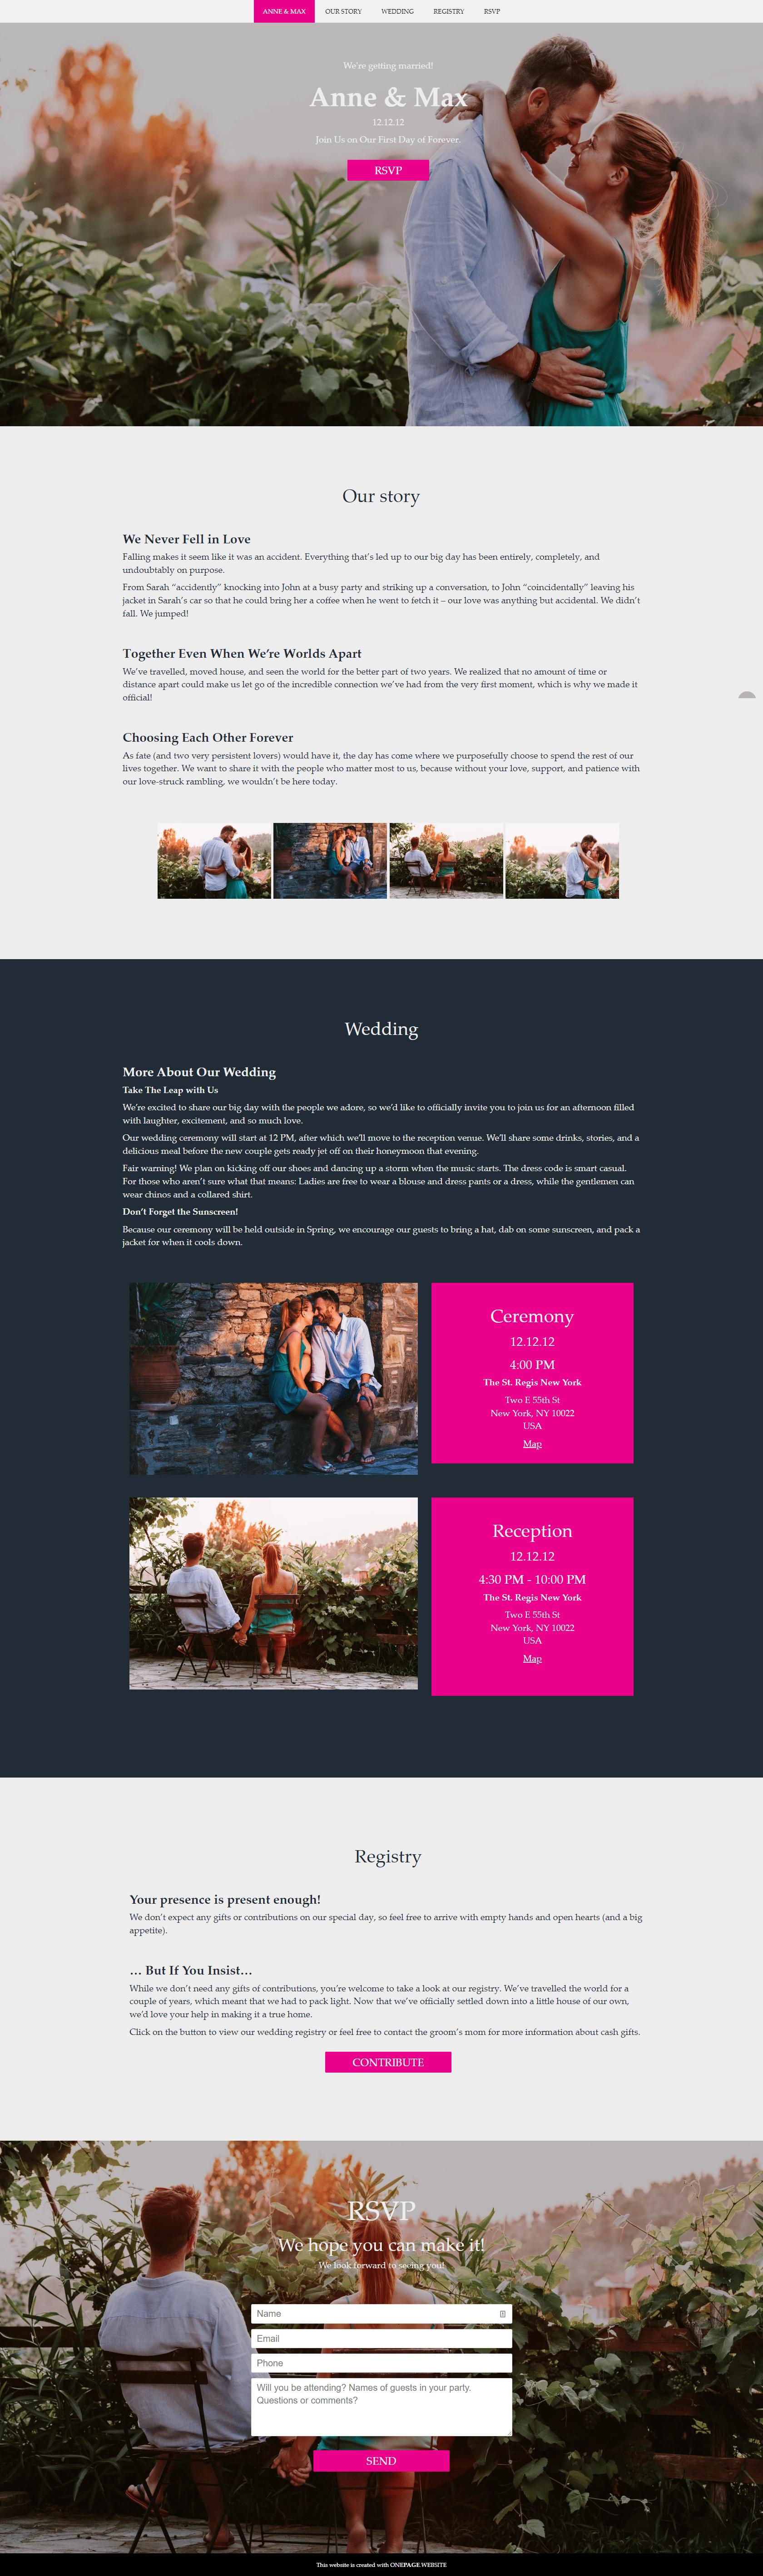 Template Wedding Website